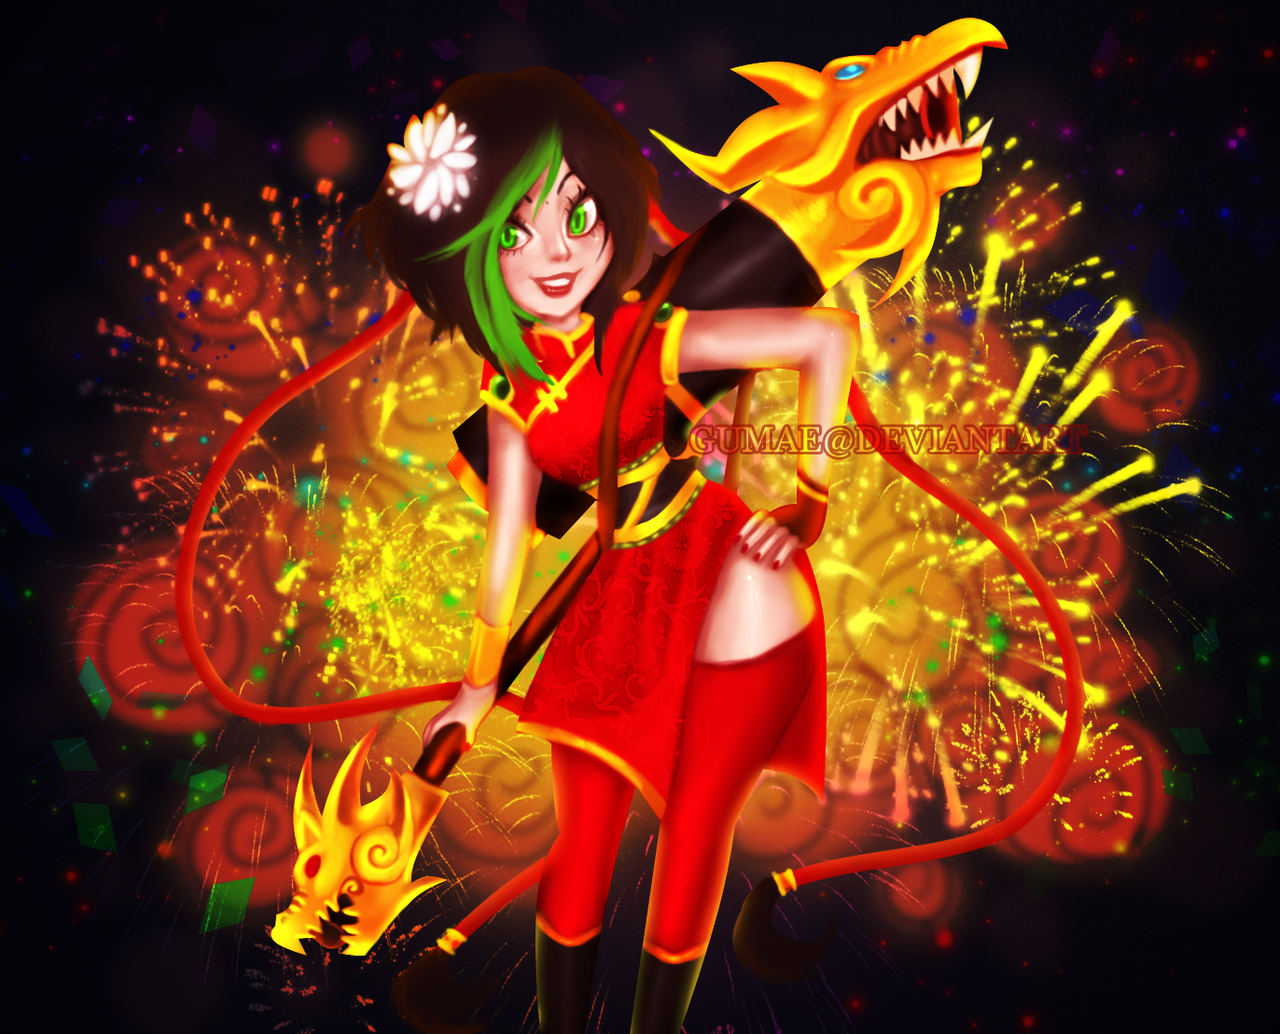 Firecracker Jinx By Gumae